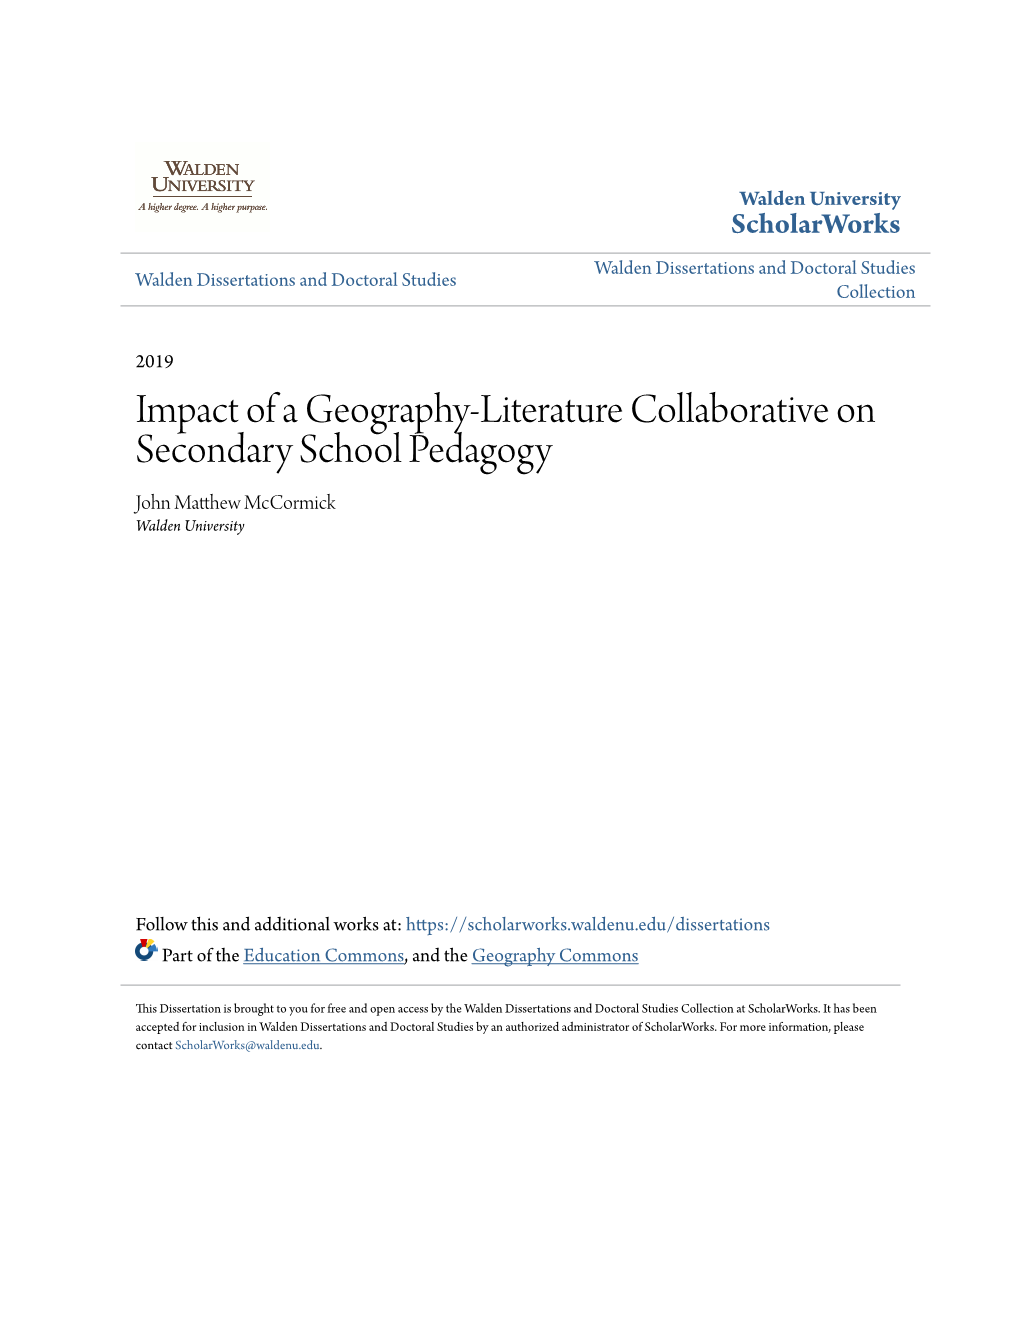 Impact of a Geography-Literature Collaborative on Secondary School Pedagogy John Matthew Cm Cormick Walden University